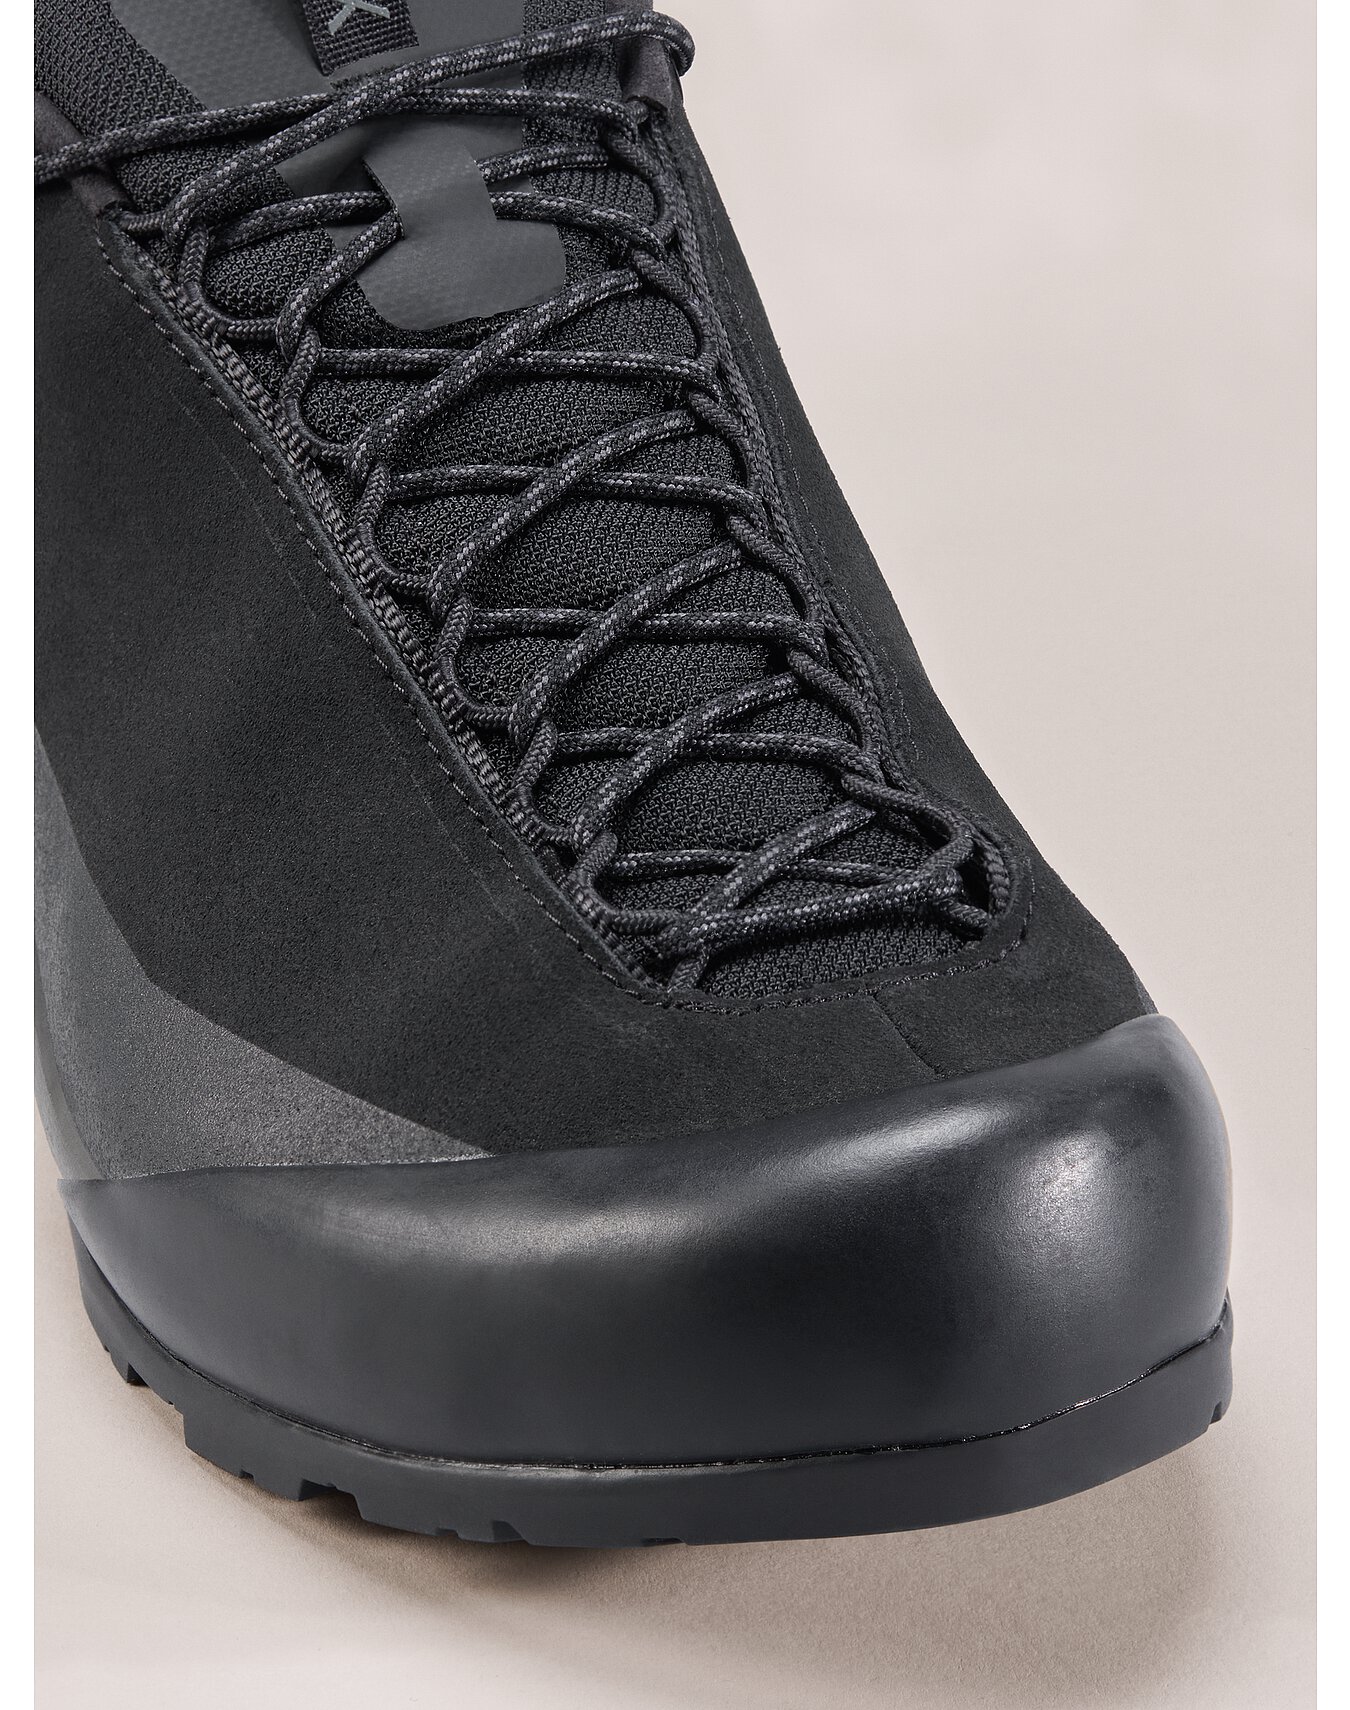 Konseal FL 2 Leather GTX Shoe Men's | Arc'teryx